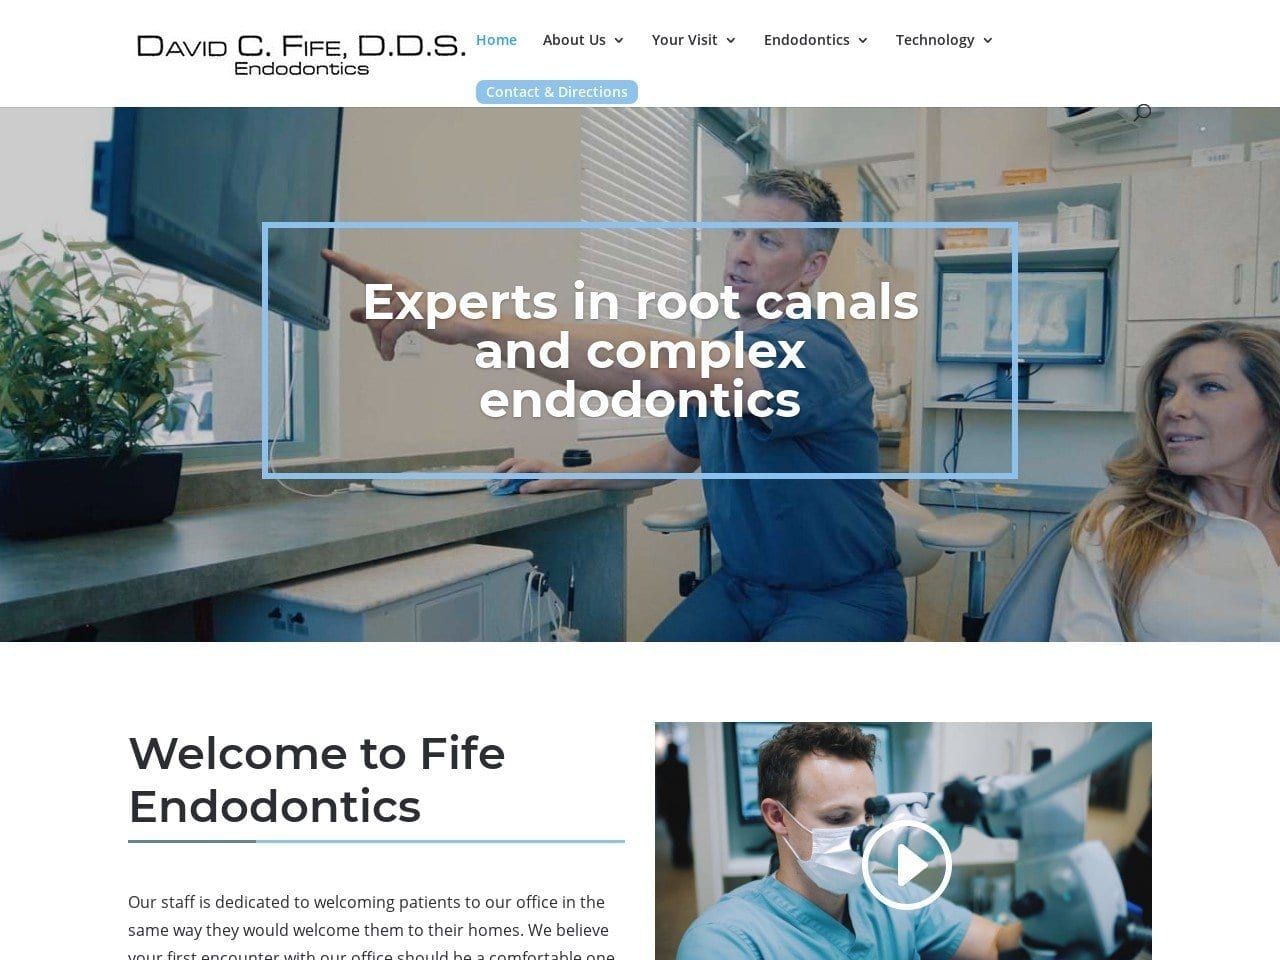 David C Fife Endodontics Website Screenshot from drdavidfife.com